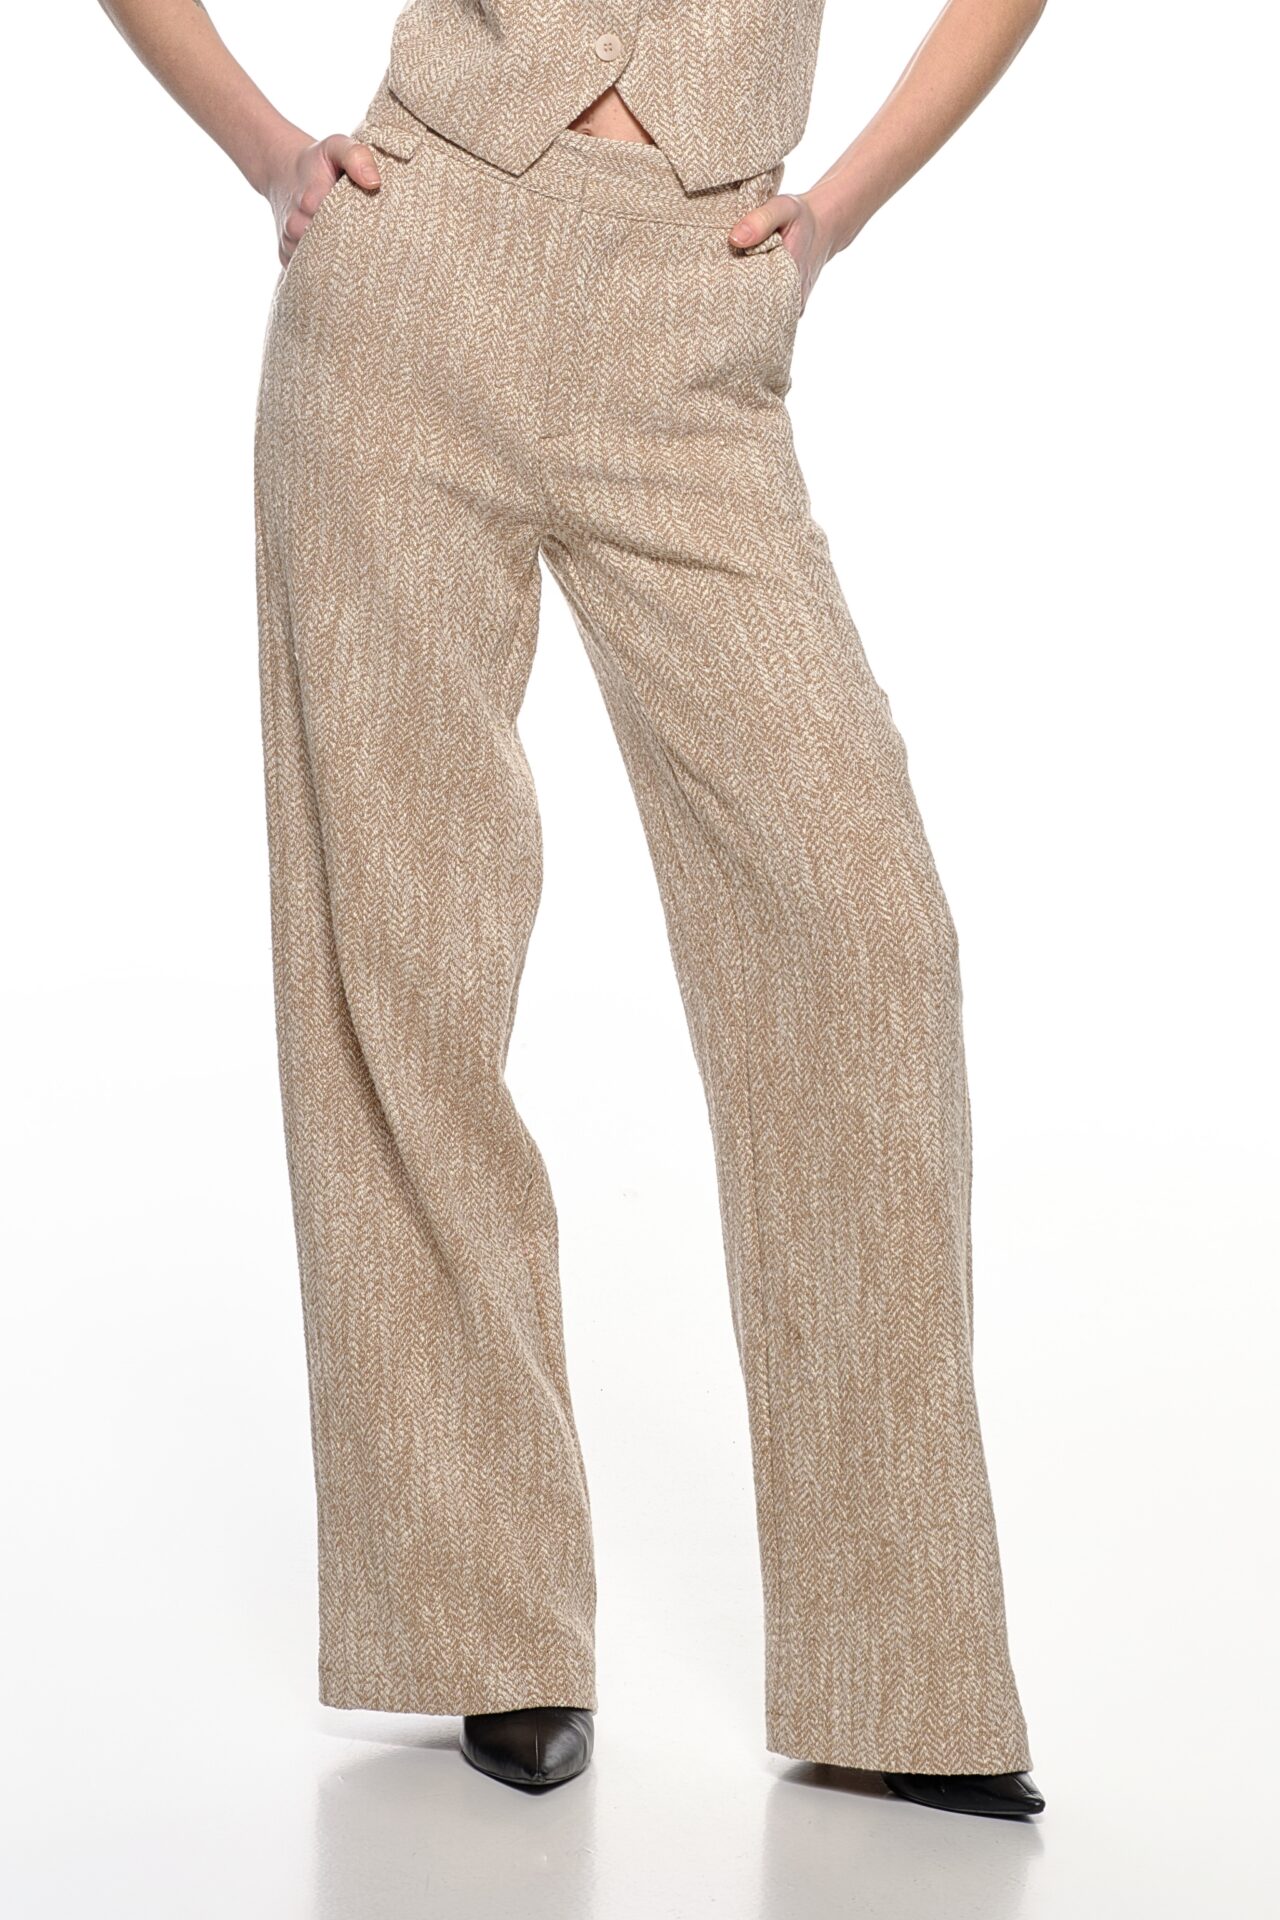 pantaloni-art-ld0528 (2)